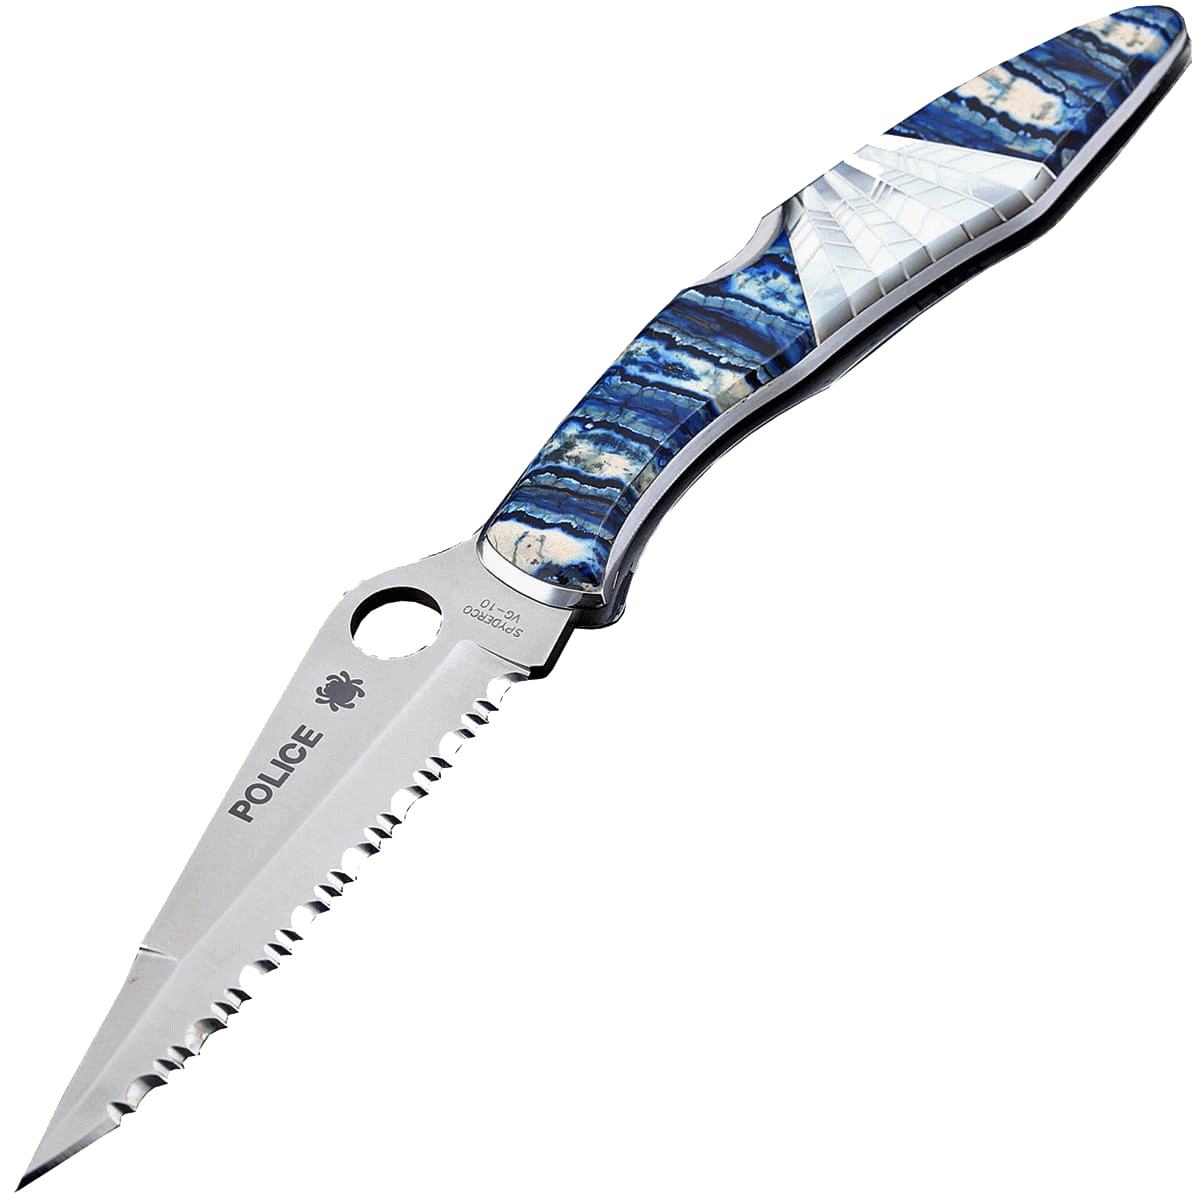 Складной нож Santa Fe Spyderco Police Serrated, сталь VG-10, рукоять сталь с накладкой из зуба мамонта/перламутра - фото 1